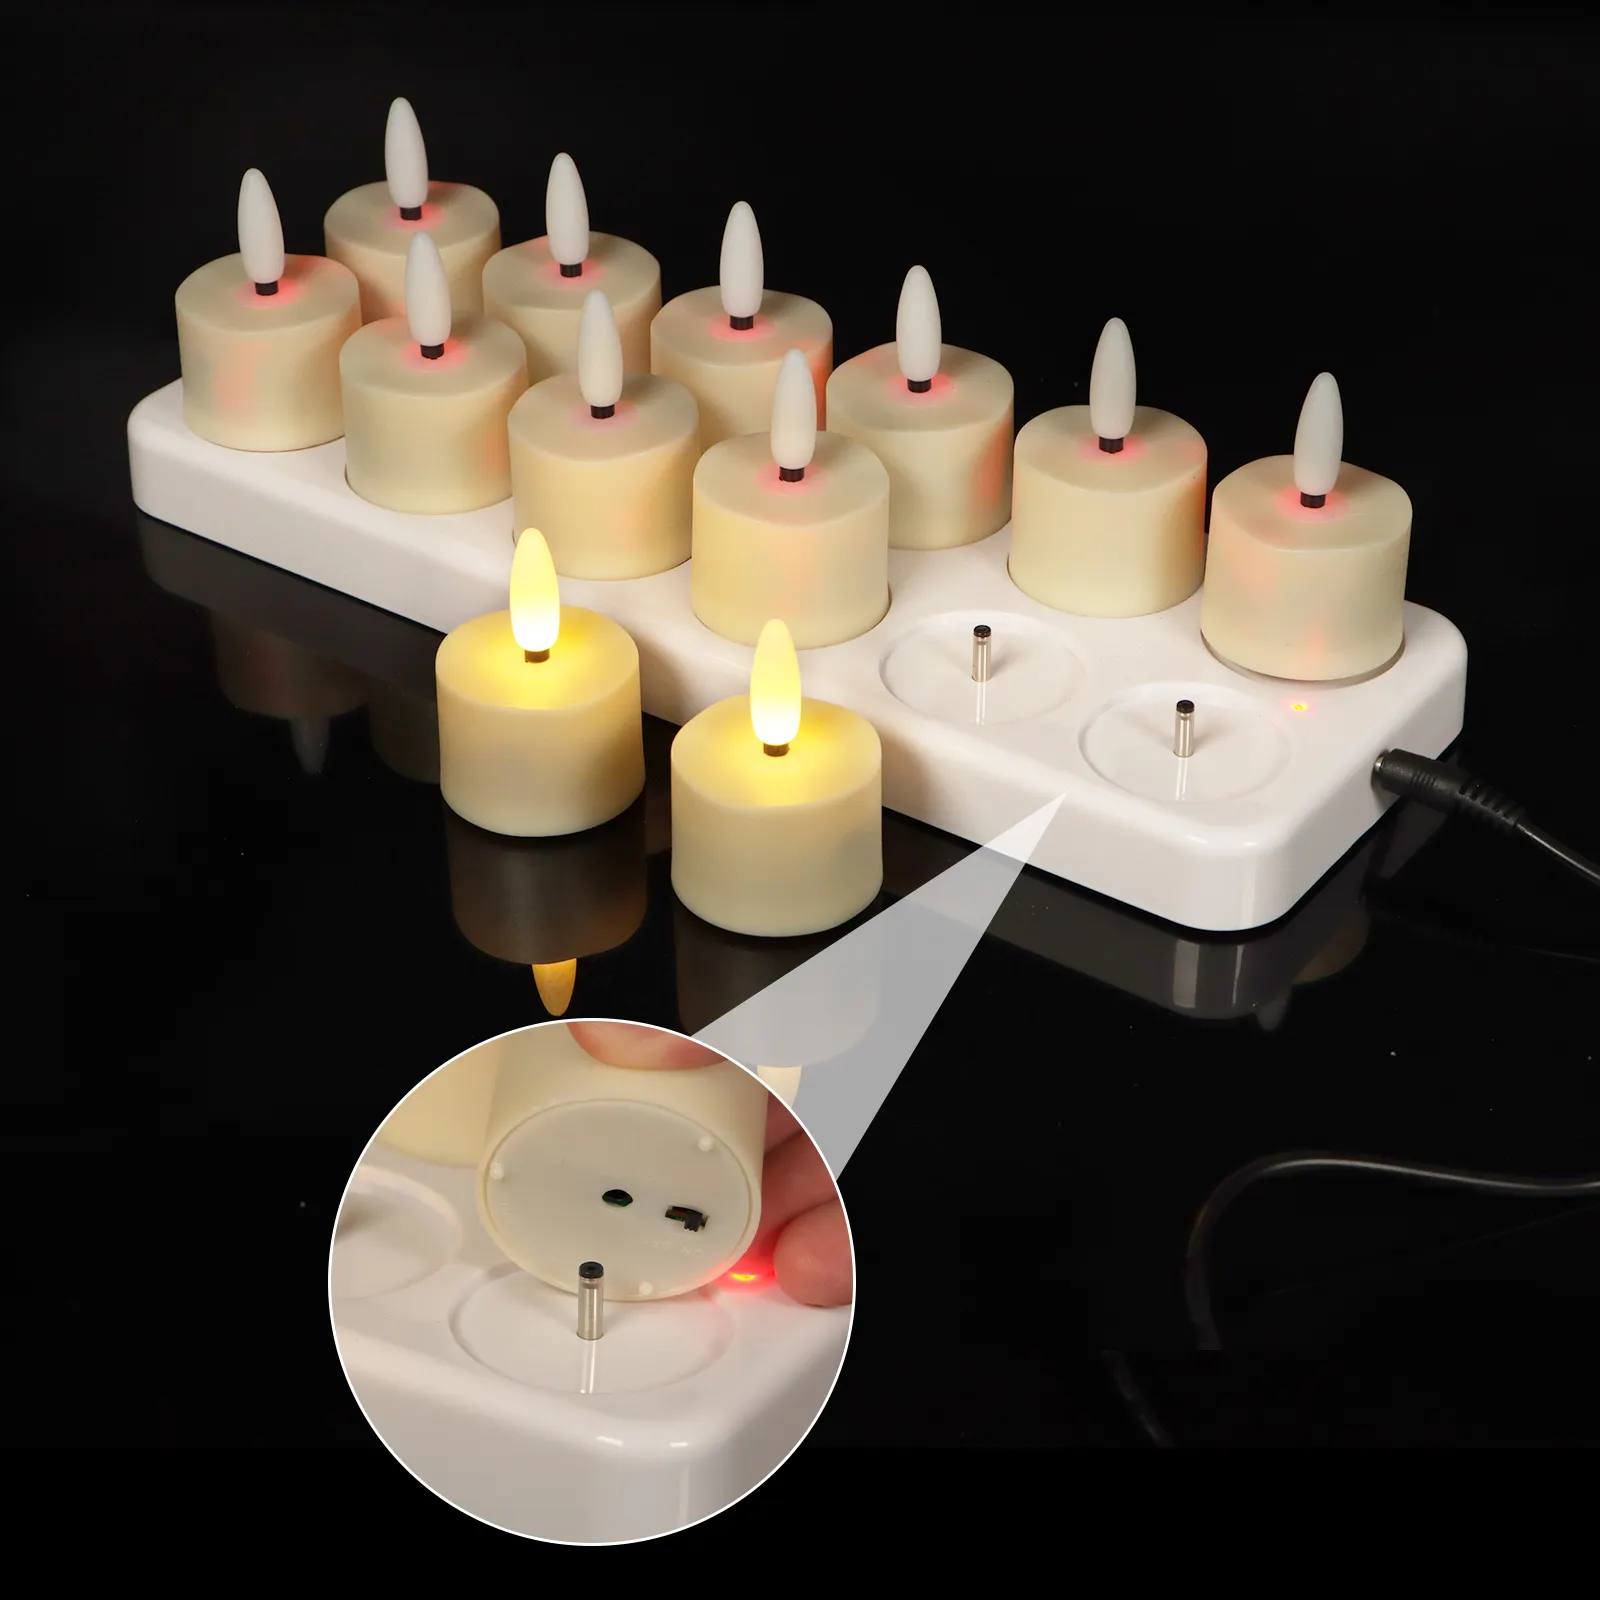 Heimdekoration 3D 12er-Pack mit echter Flamme batteriebetriebene Led-Kerze mit Ferntimer, flammelose Kerzen wiederaufladbare Batterie